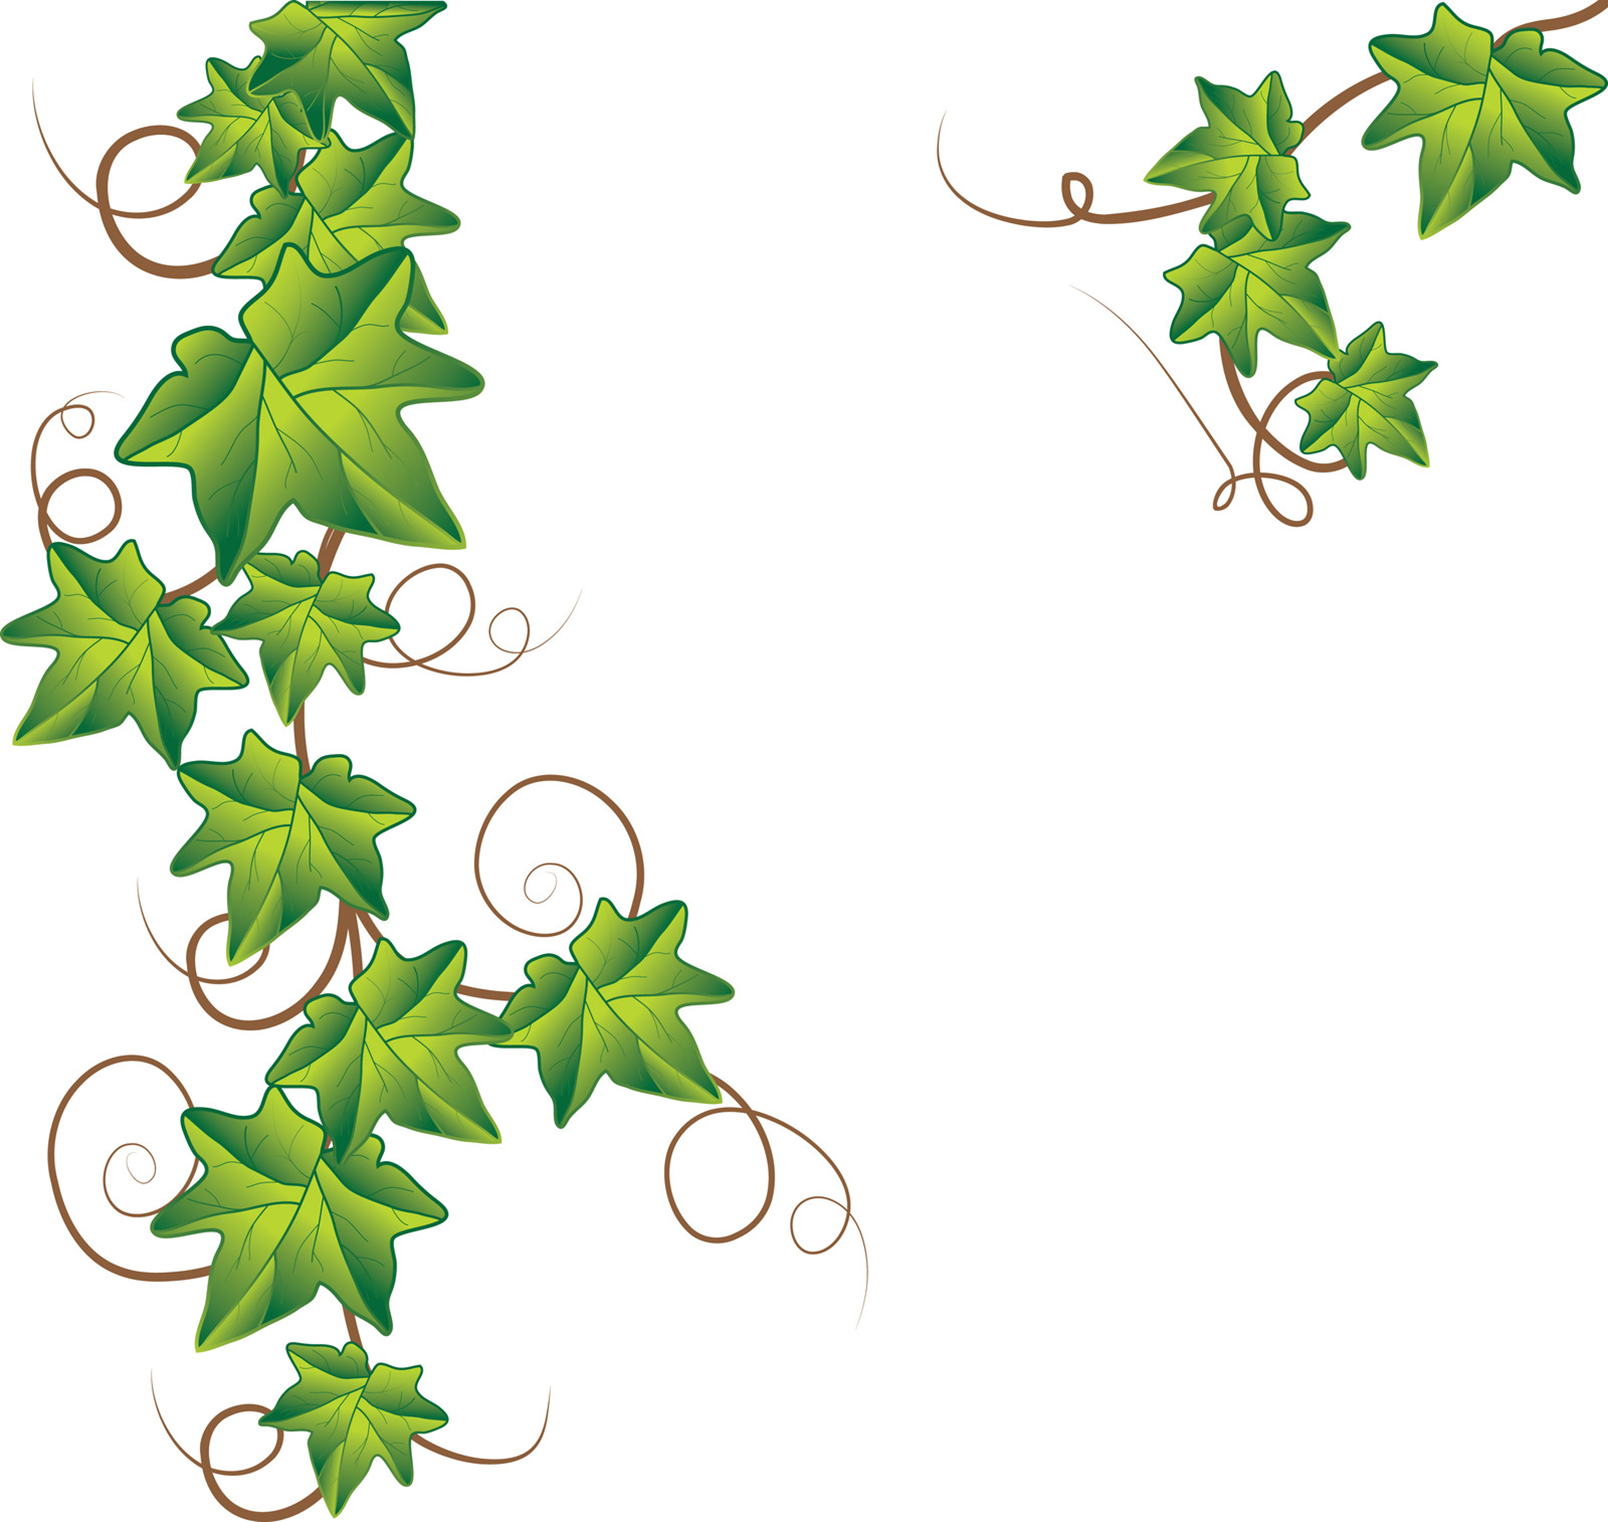 Irish ivy leaf art clipart 